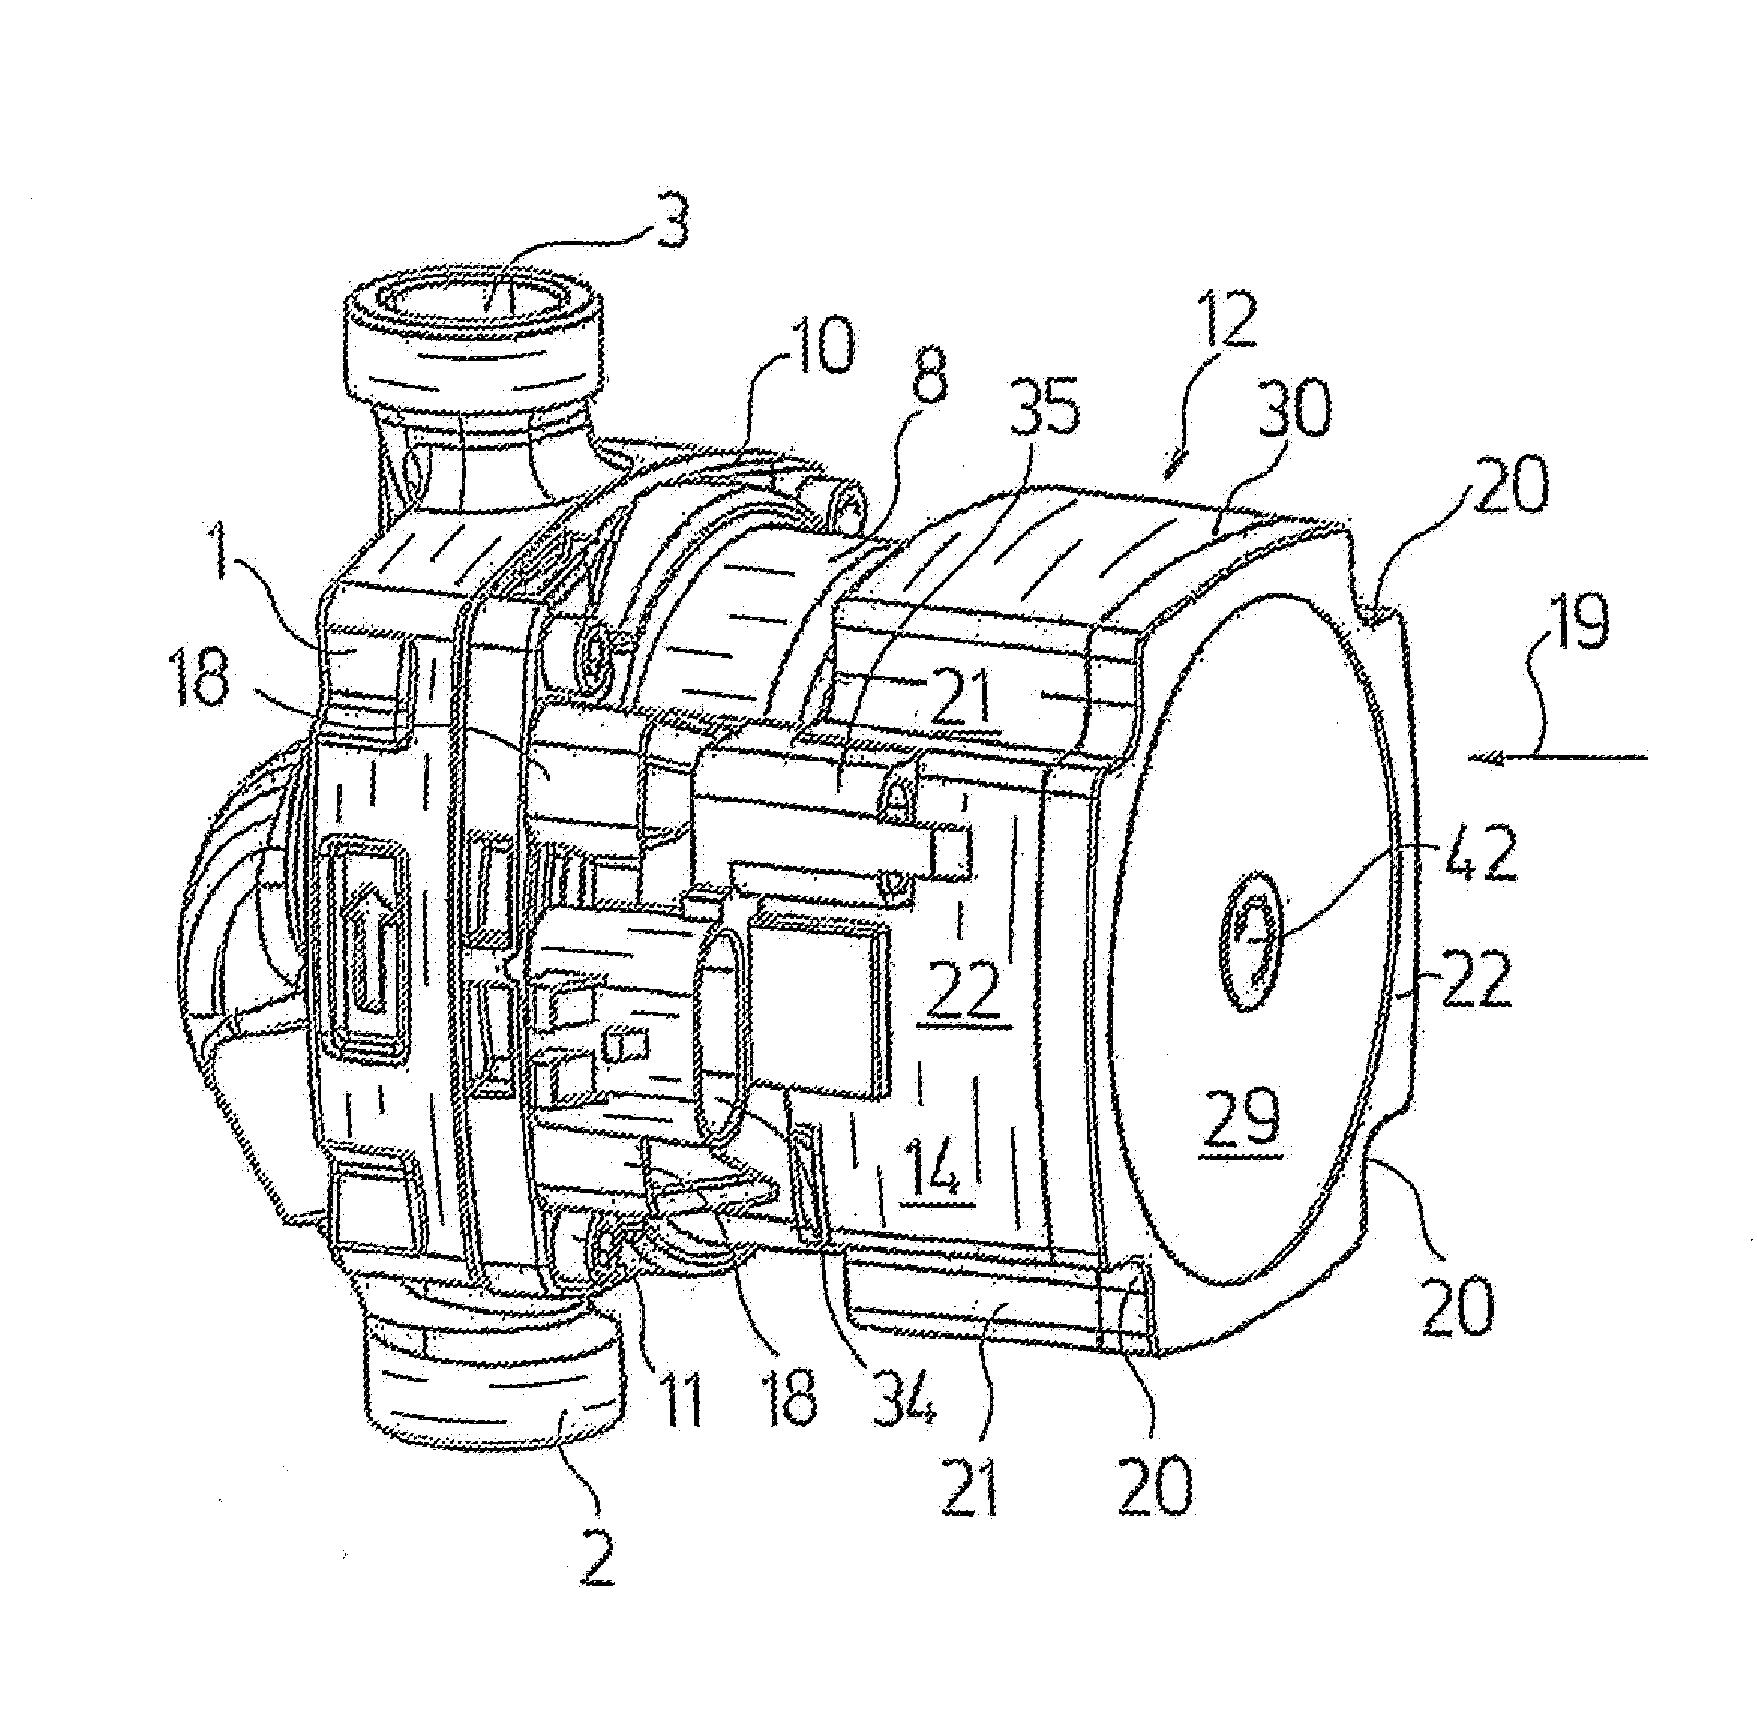 Heat circulation pump